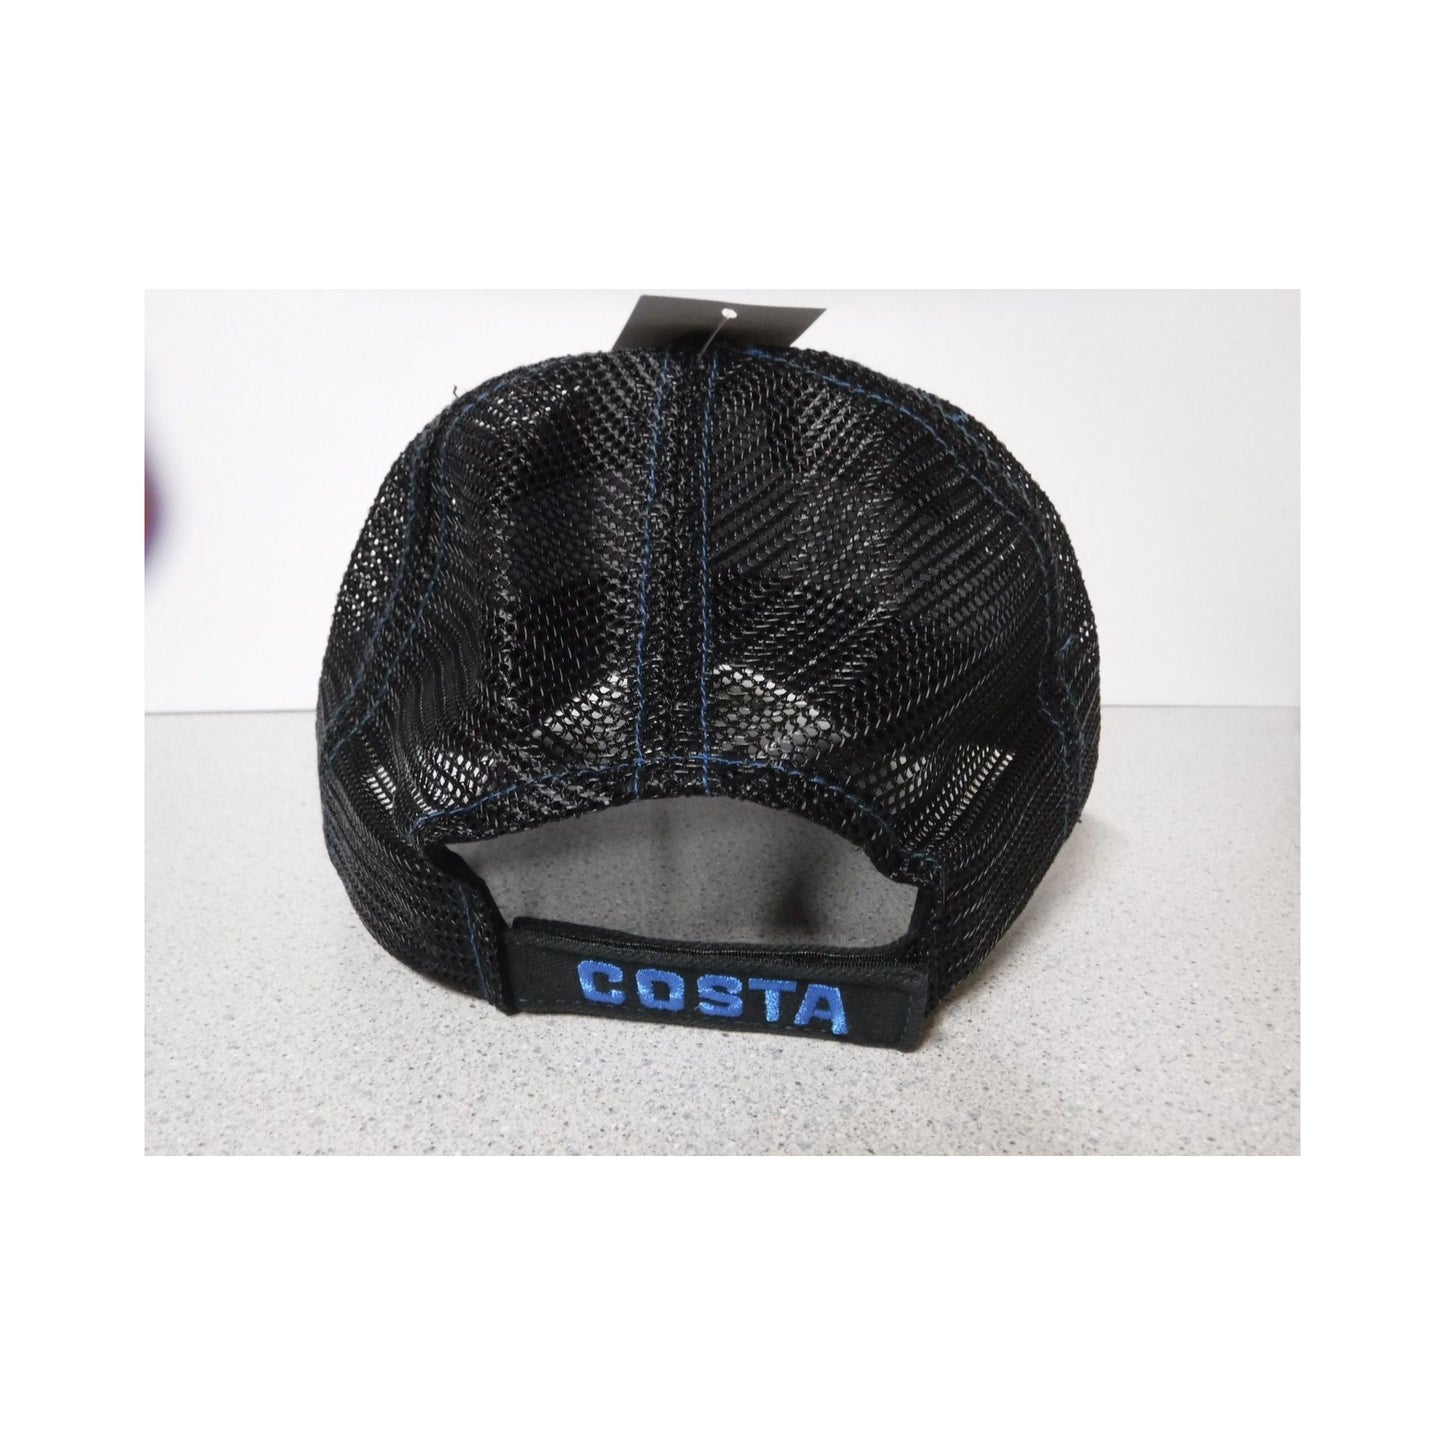 New Authentic Costa Trucker Hat Adjustable Black with Shield Logo Black Mesh